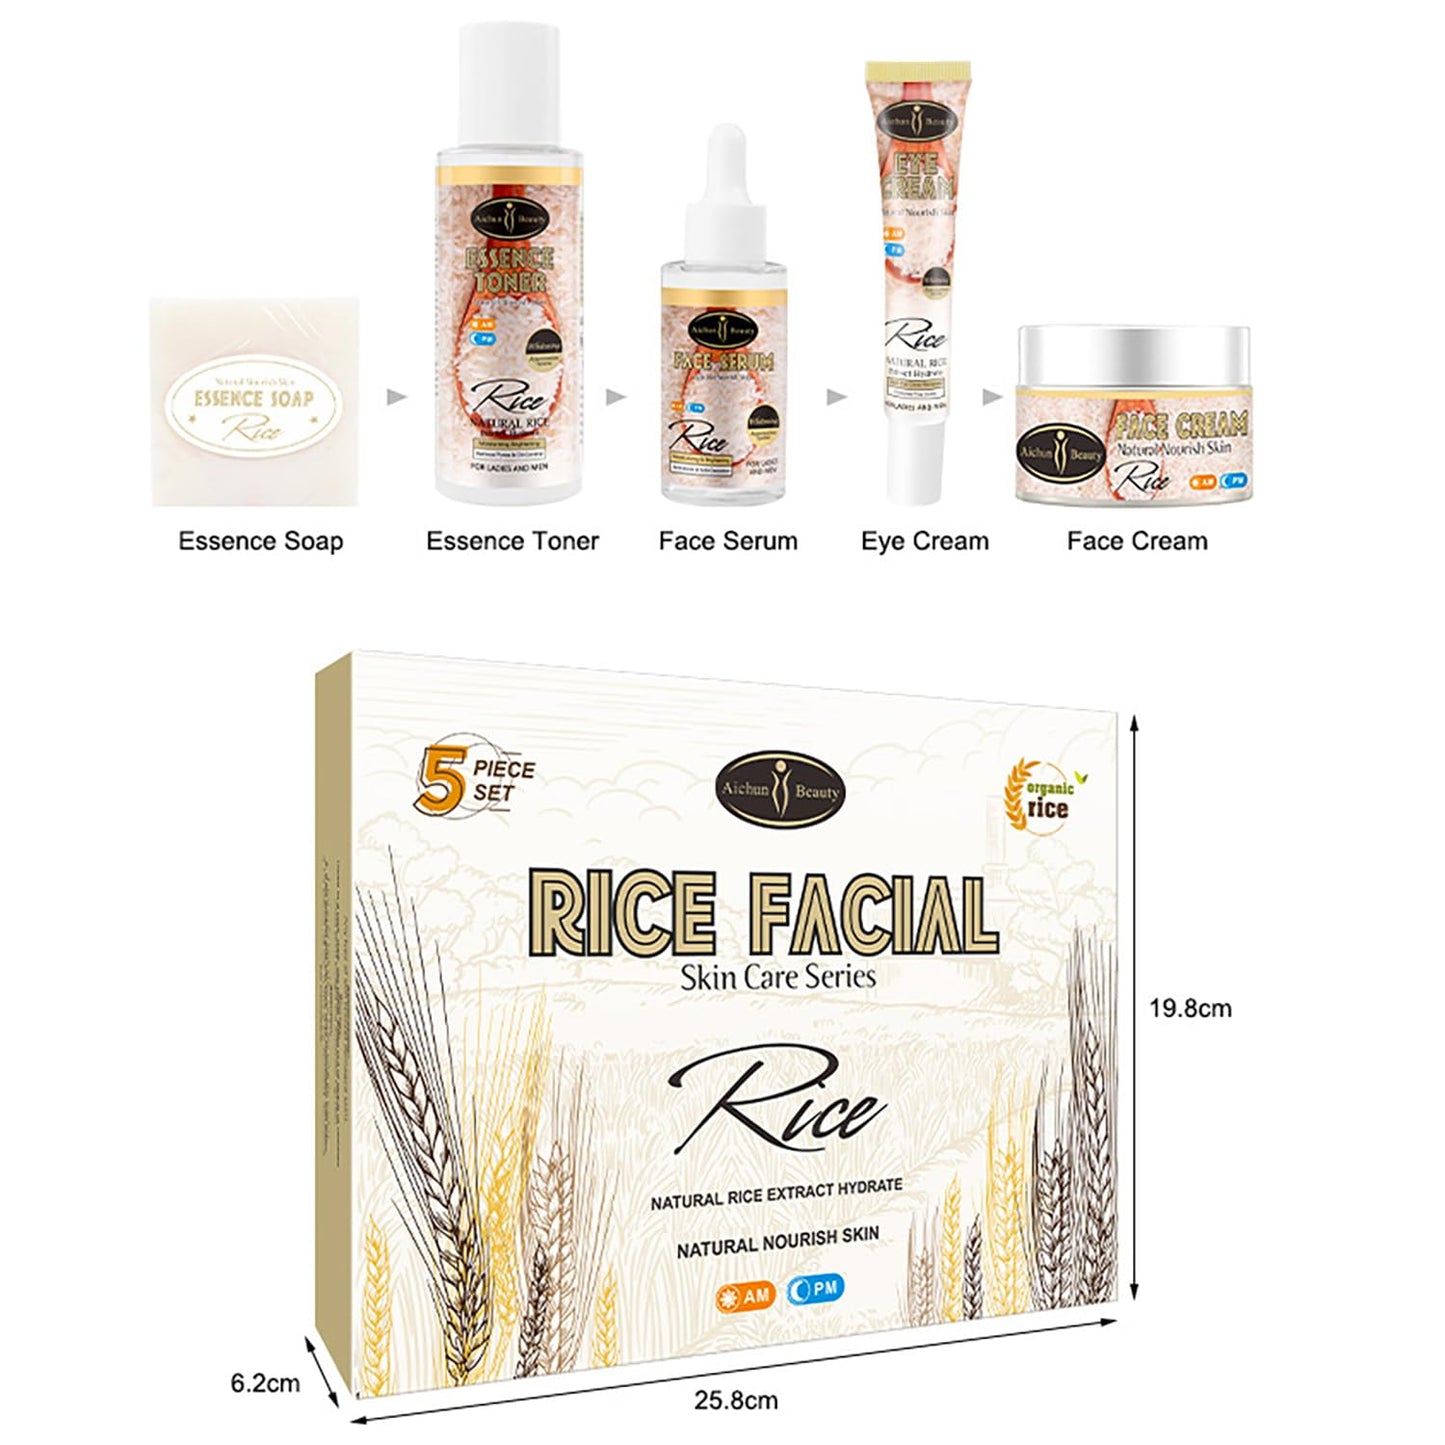 AICHUN BEAUTY Organic Rice Facial Skin Care Set Hydrate Rejuvenating Essence Soap Toner Face Serum Eye Cream Gift Box 100g+100ml+40ml+50ml+25ml 5PCS